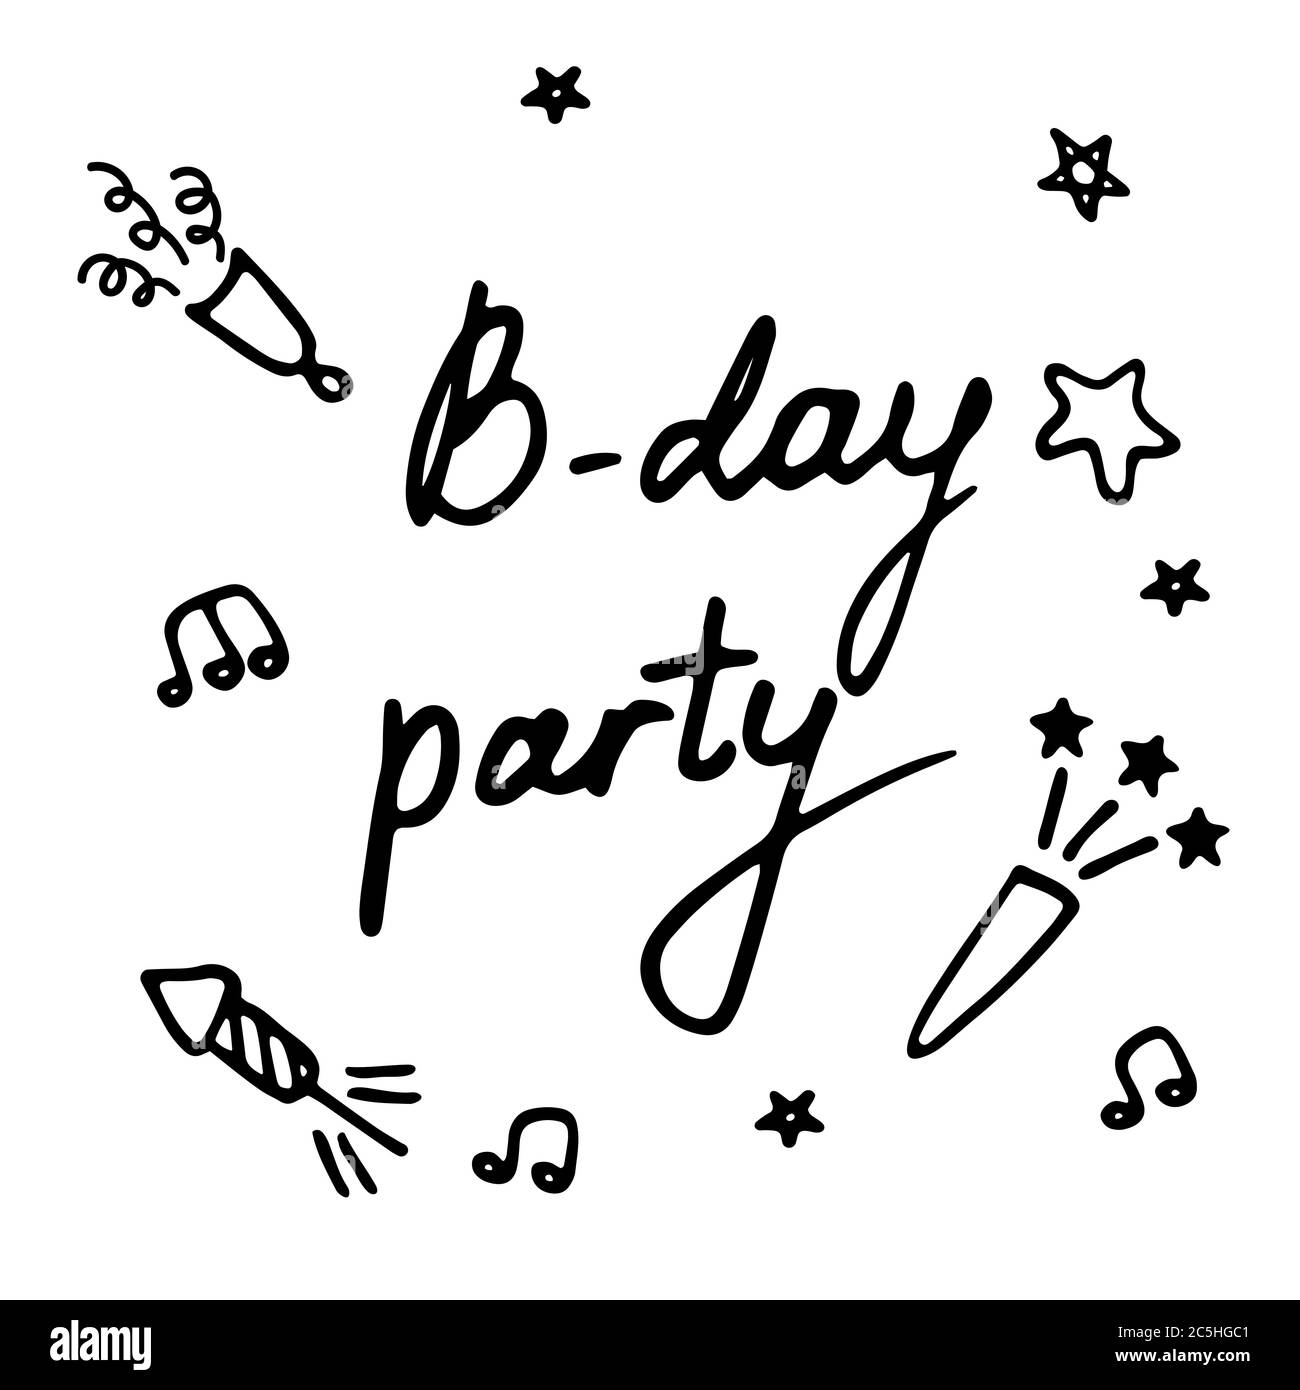 birthday-party-happy-b-day-inscription-hand-drawn-illustration